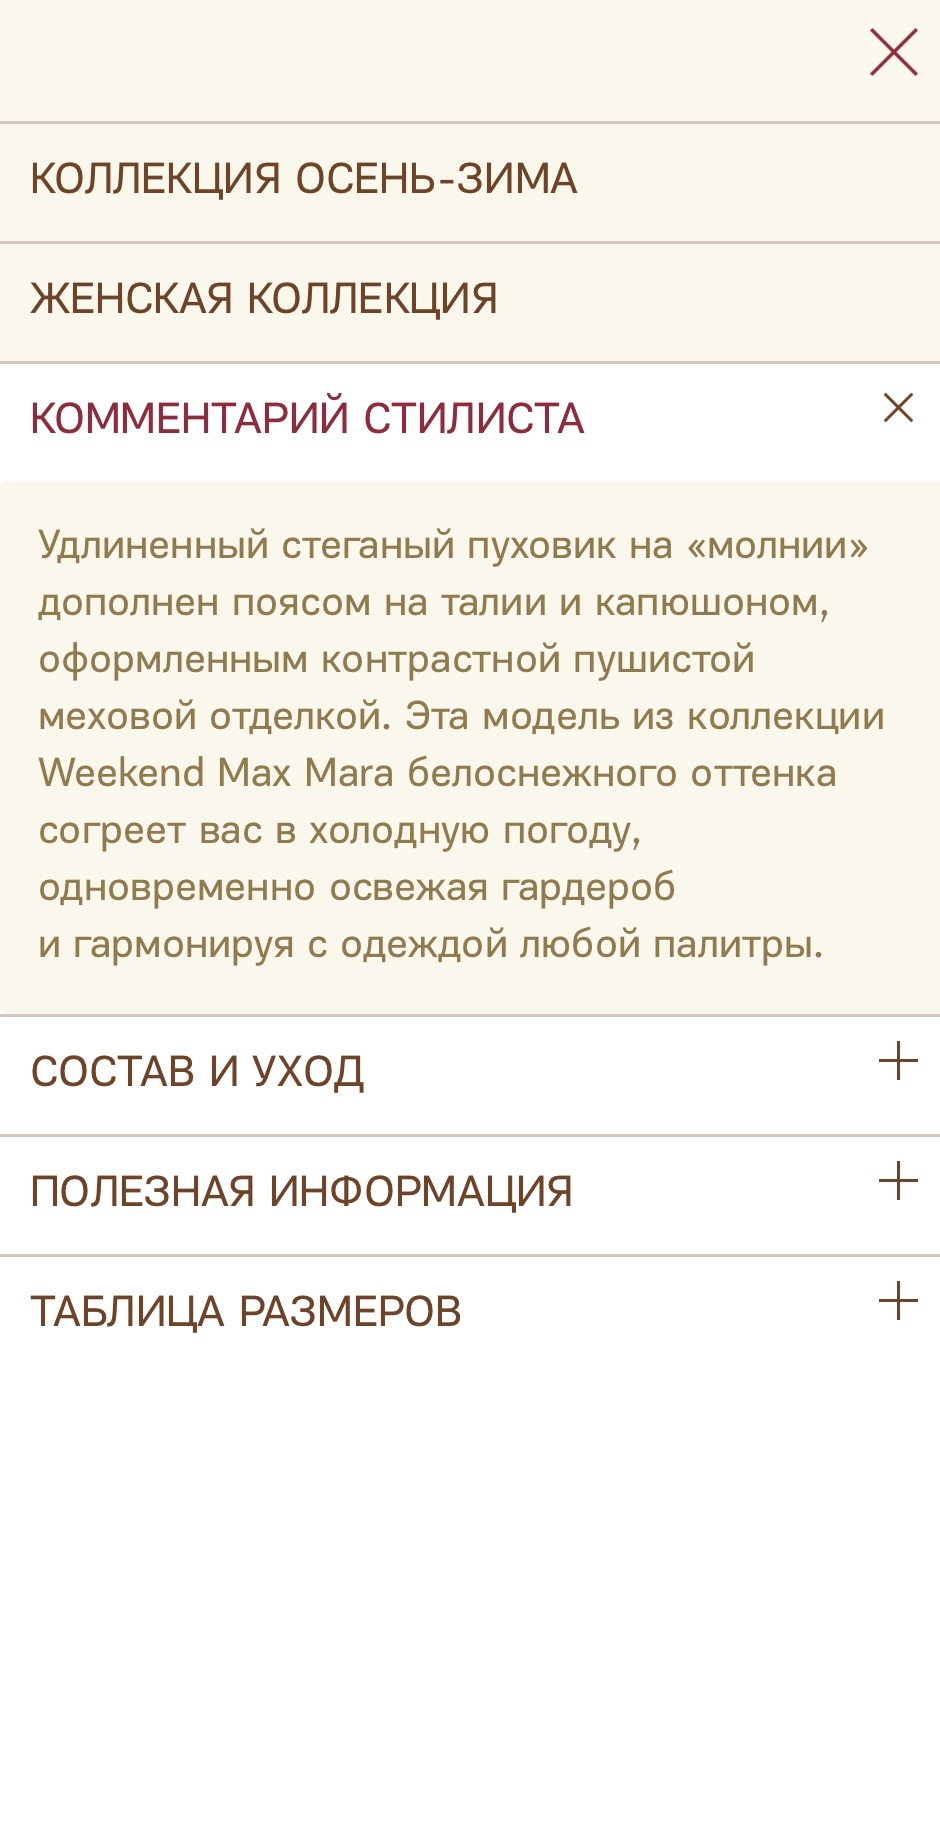 Пуховик Max Mara Weekend, p. 38 it, 40-42 рус